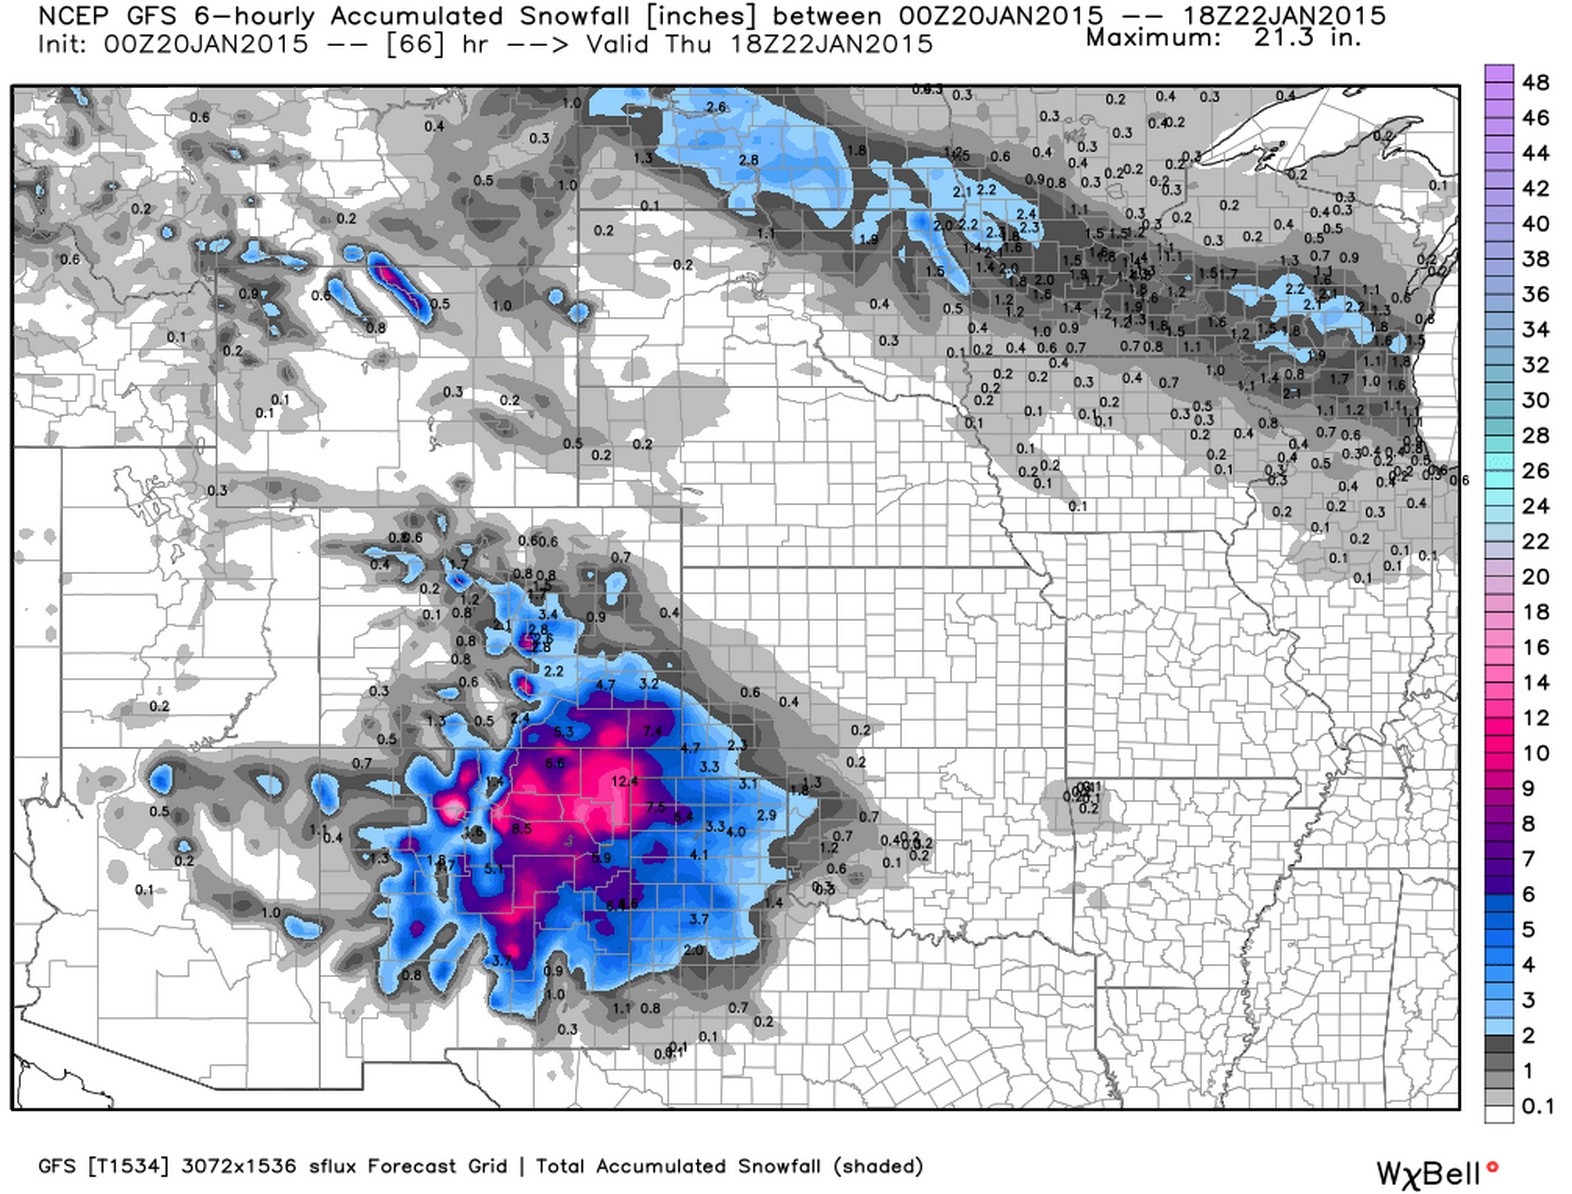 GFS snowfall forecast | WeatherBell Analytics